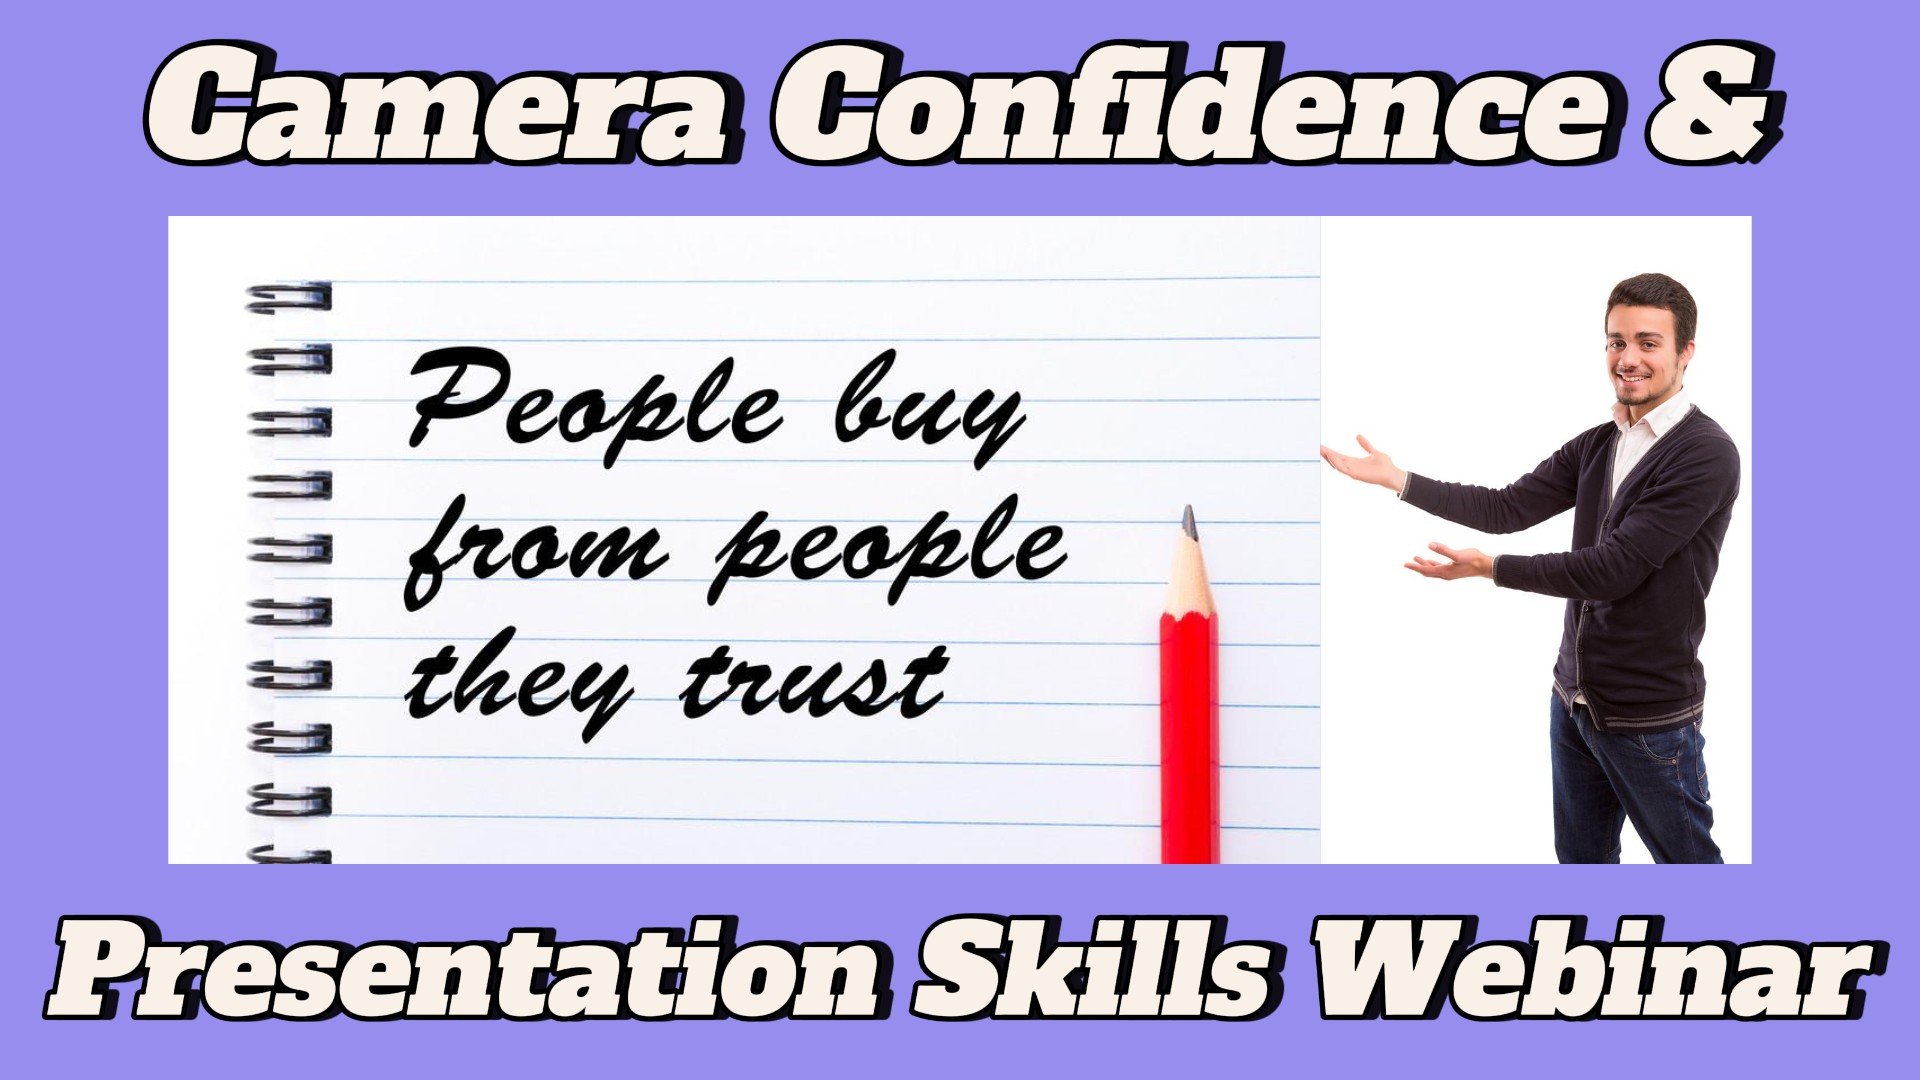 Camera Confidence & Presentation Skills (Free Webinar)